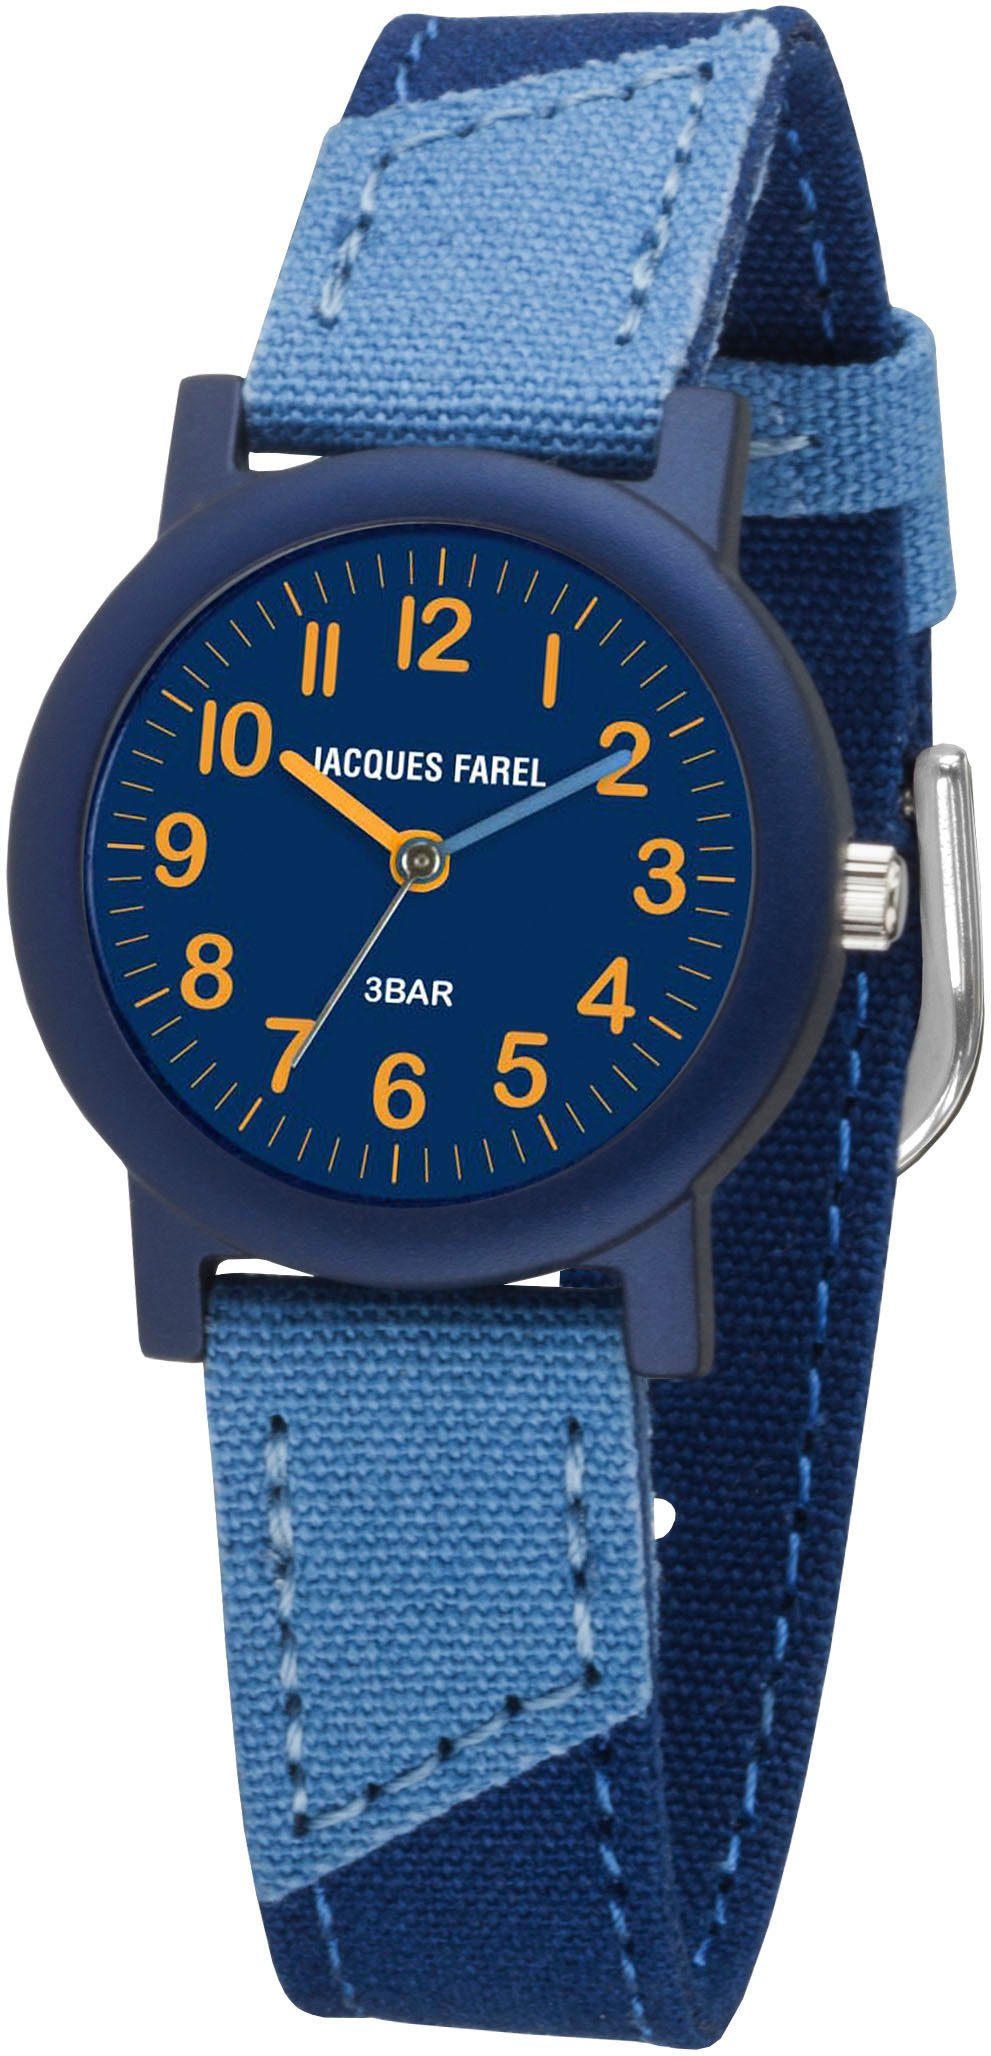 Jacques Farel Quarzuhr ORG 1467, Armbanduhr, Kinderuhr, ideal auch als Geschenk